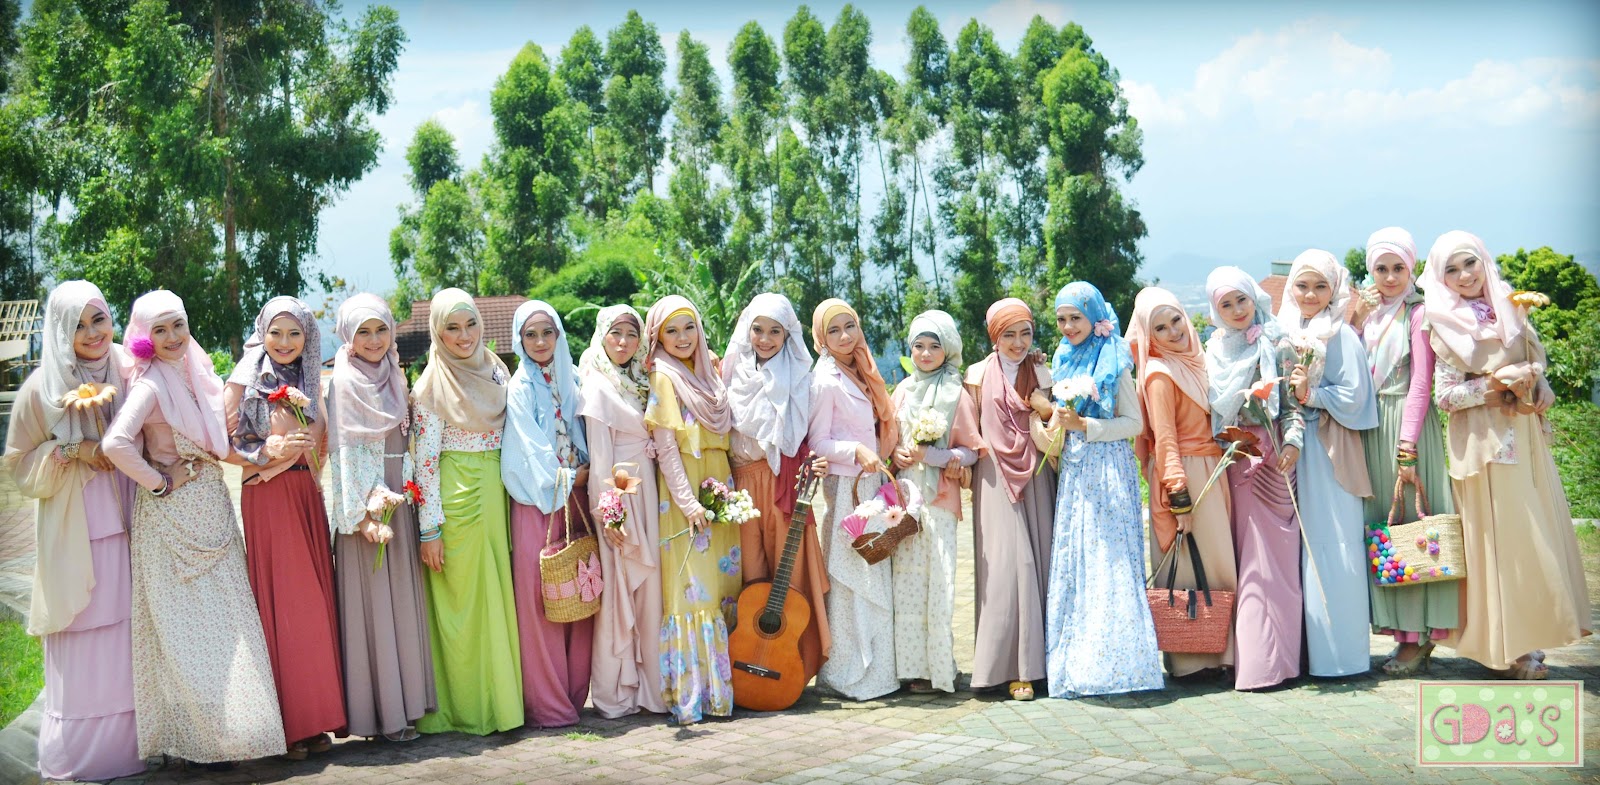 Pin Hijabers-community-bandung-facebook on Pinterest